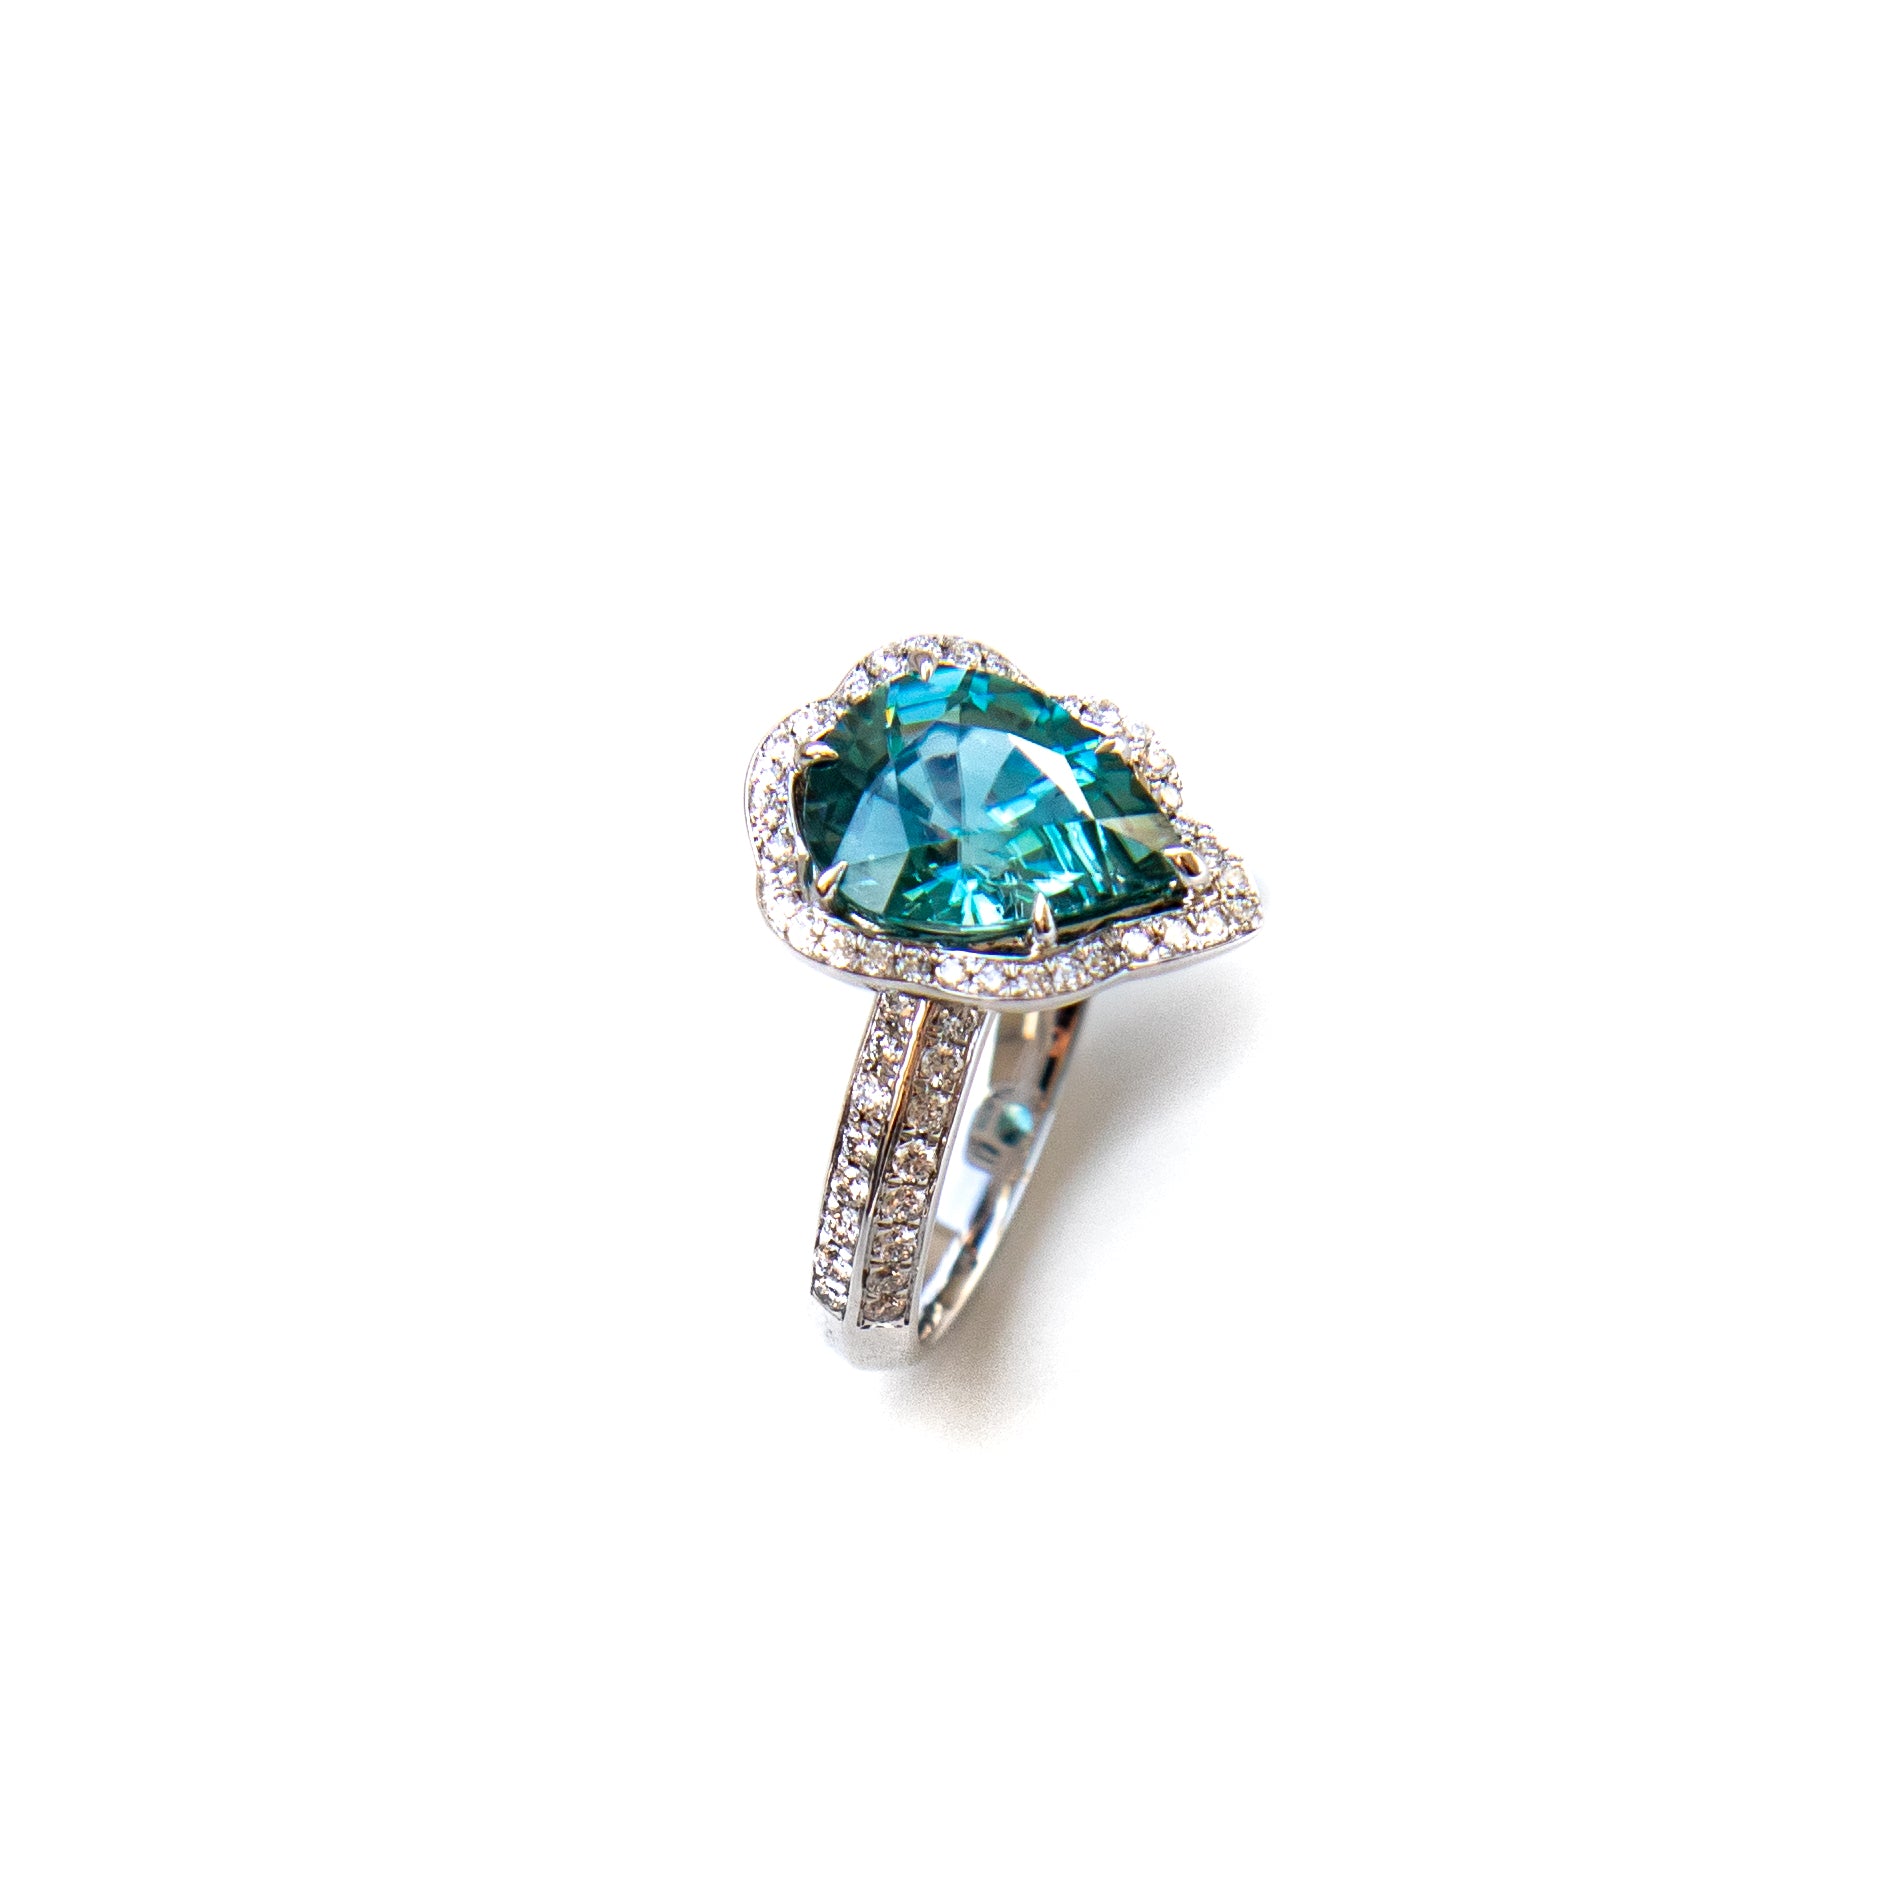 Ornate diamond halo and natural zircon ring